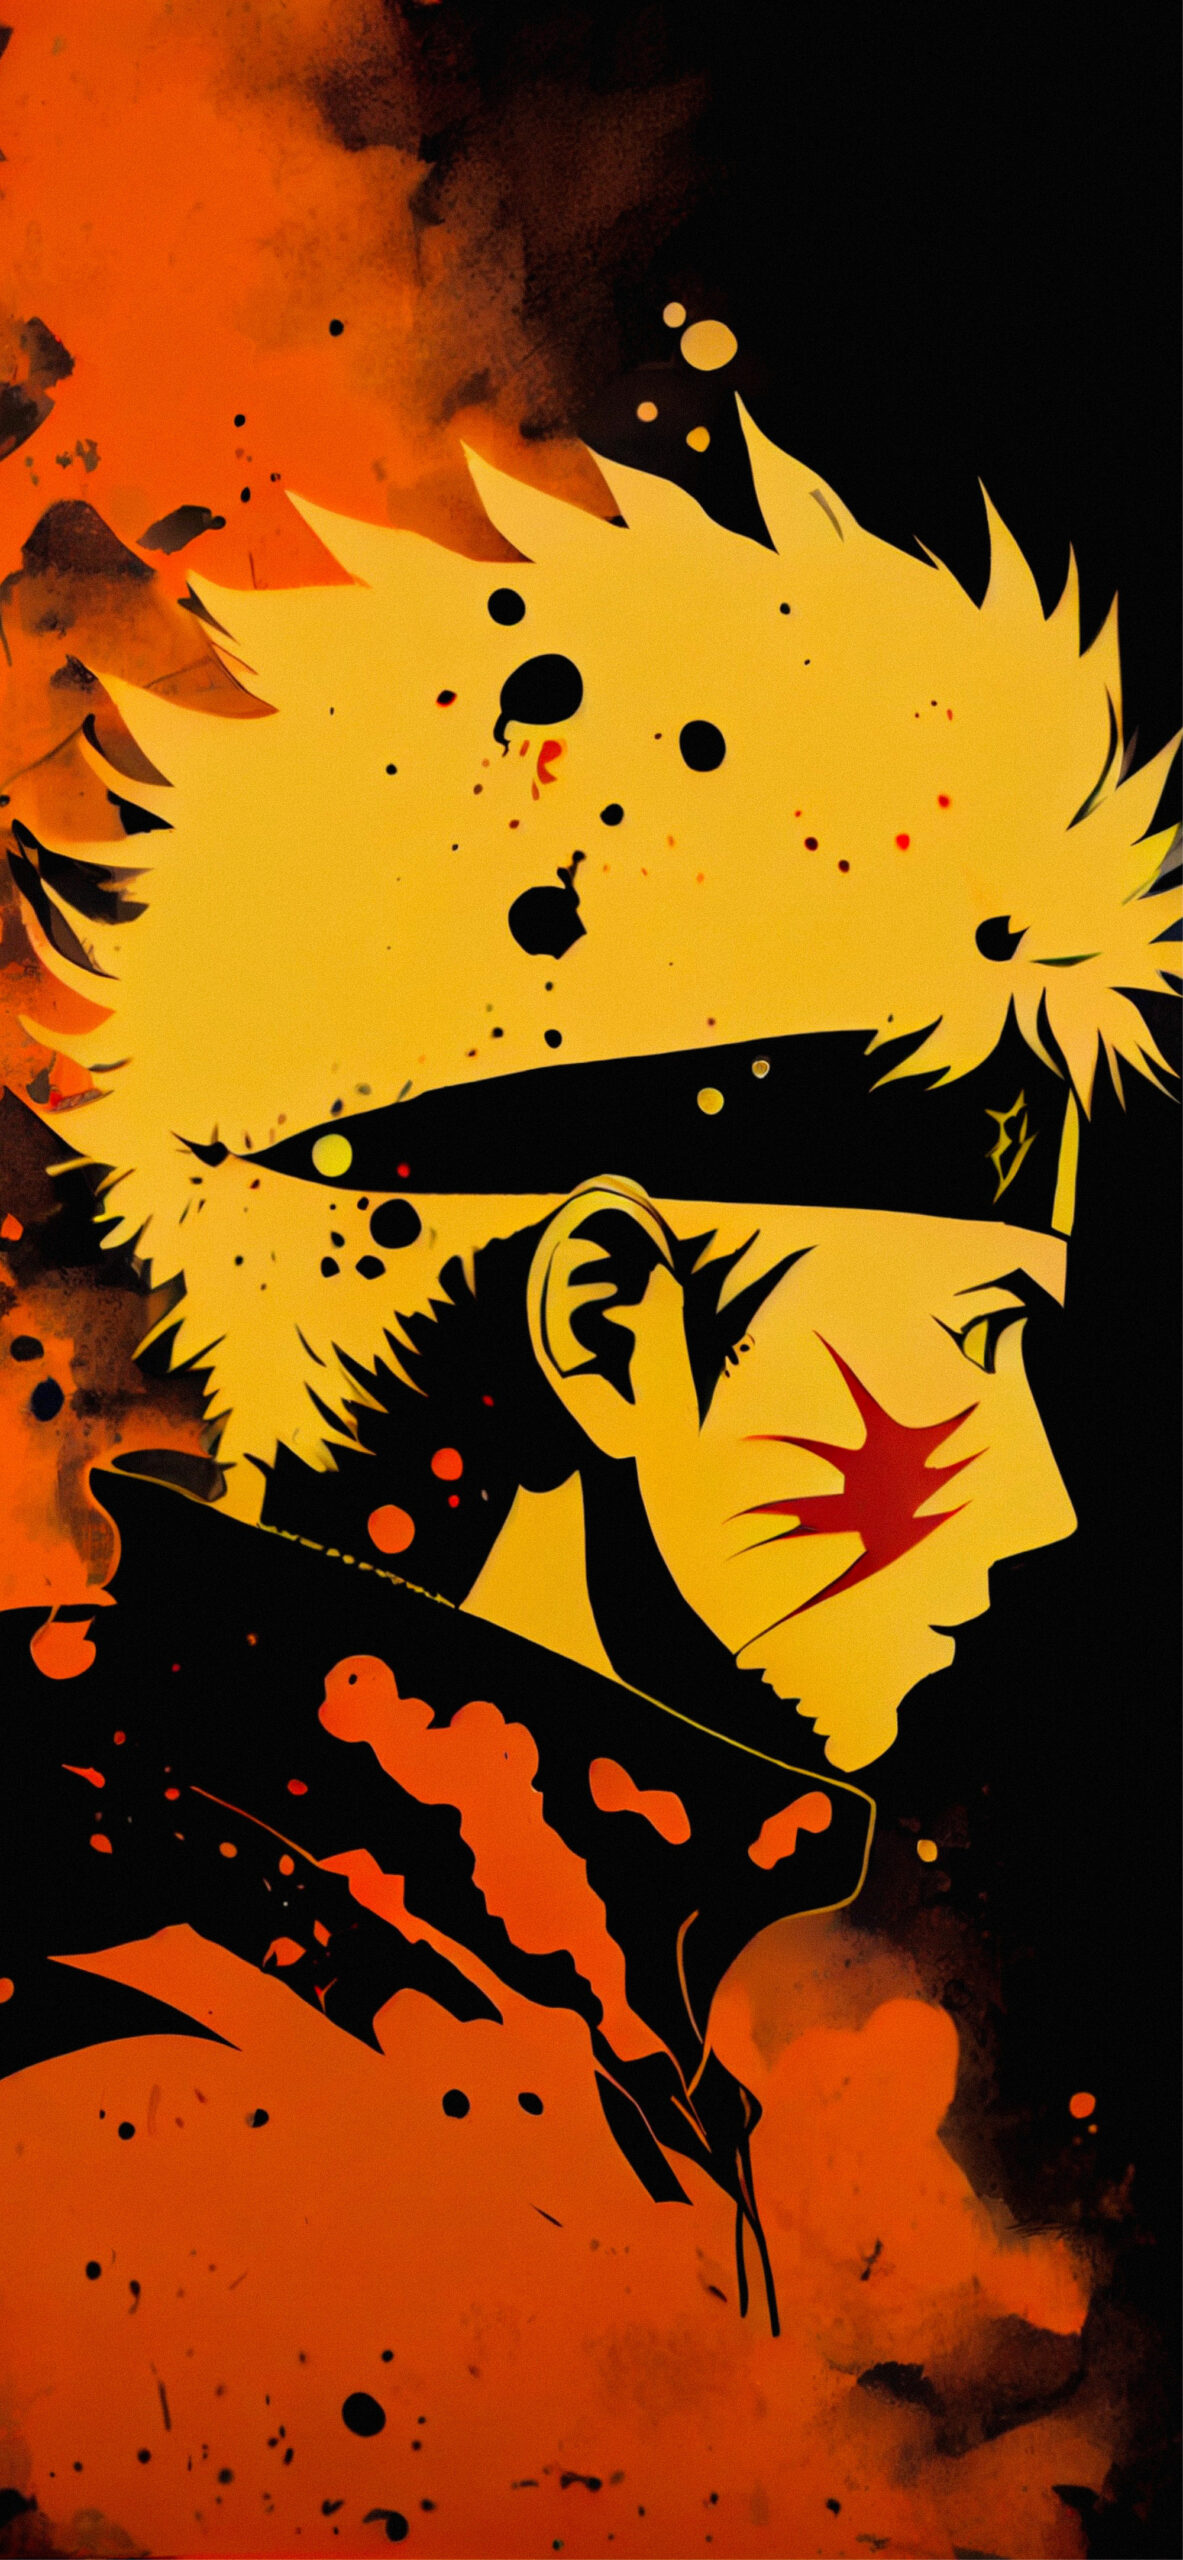 Aesthetic Naruto Wallpaper - Cool Anime Wallpaper with Naruto